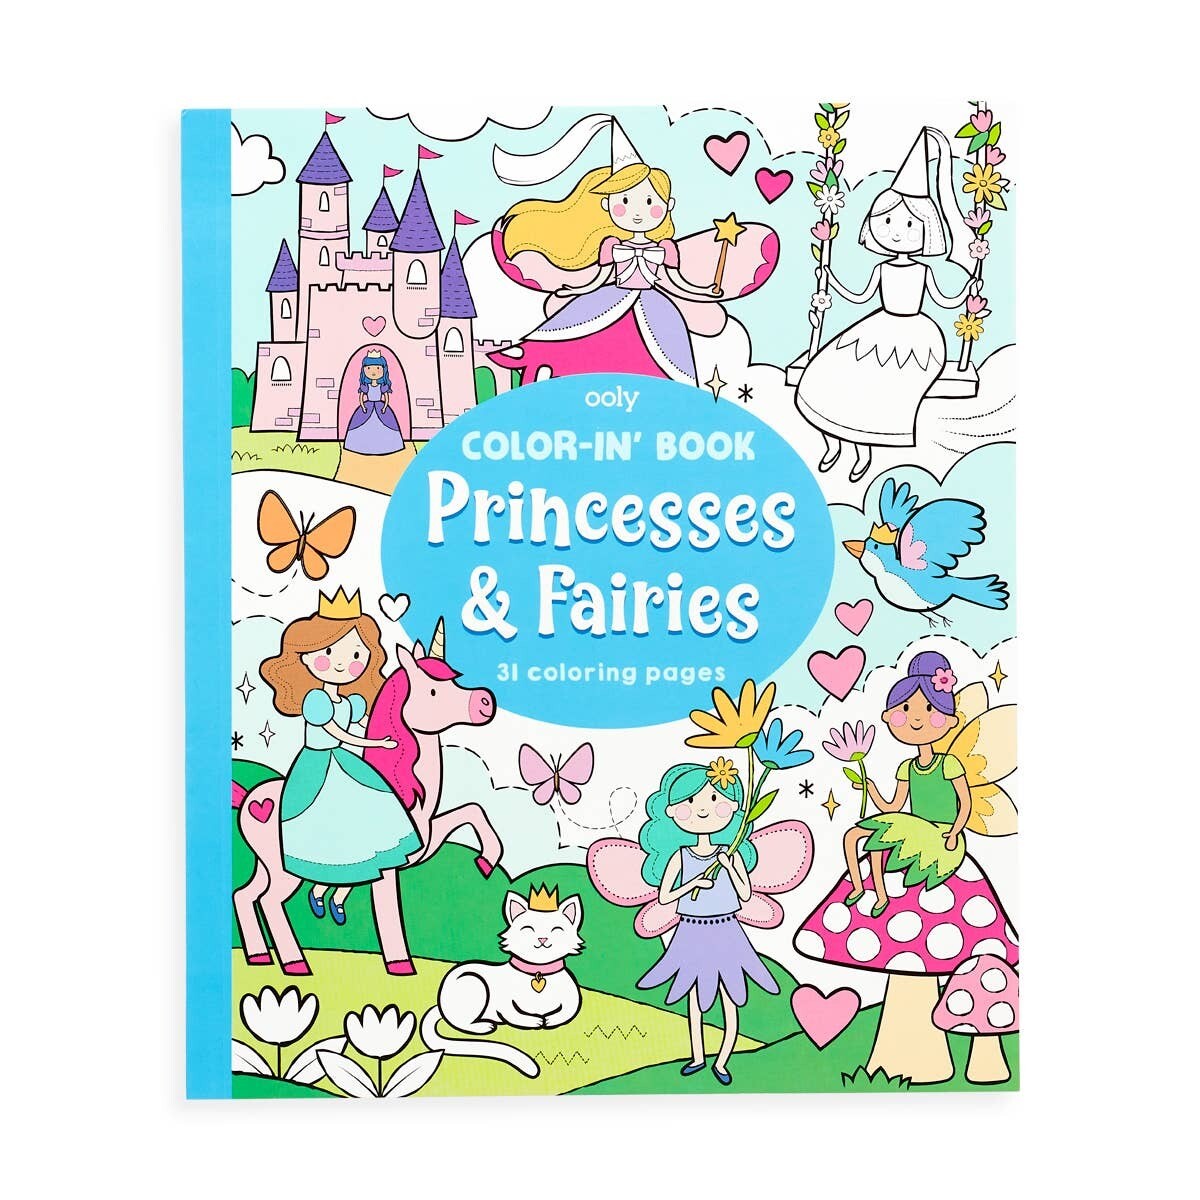 Color-in Book: Princess & Fairies